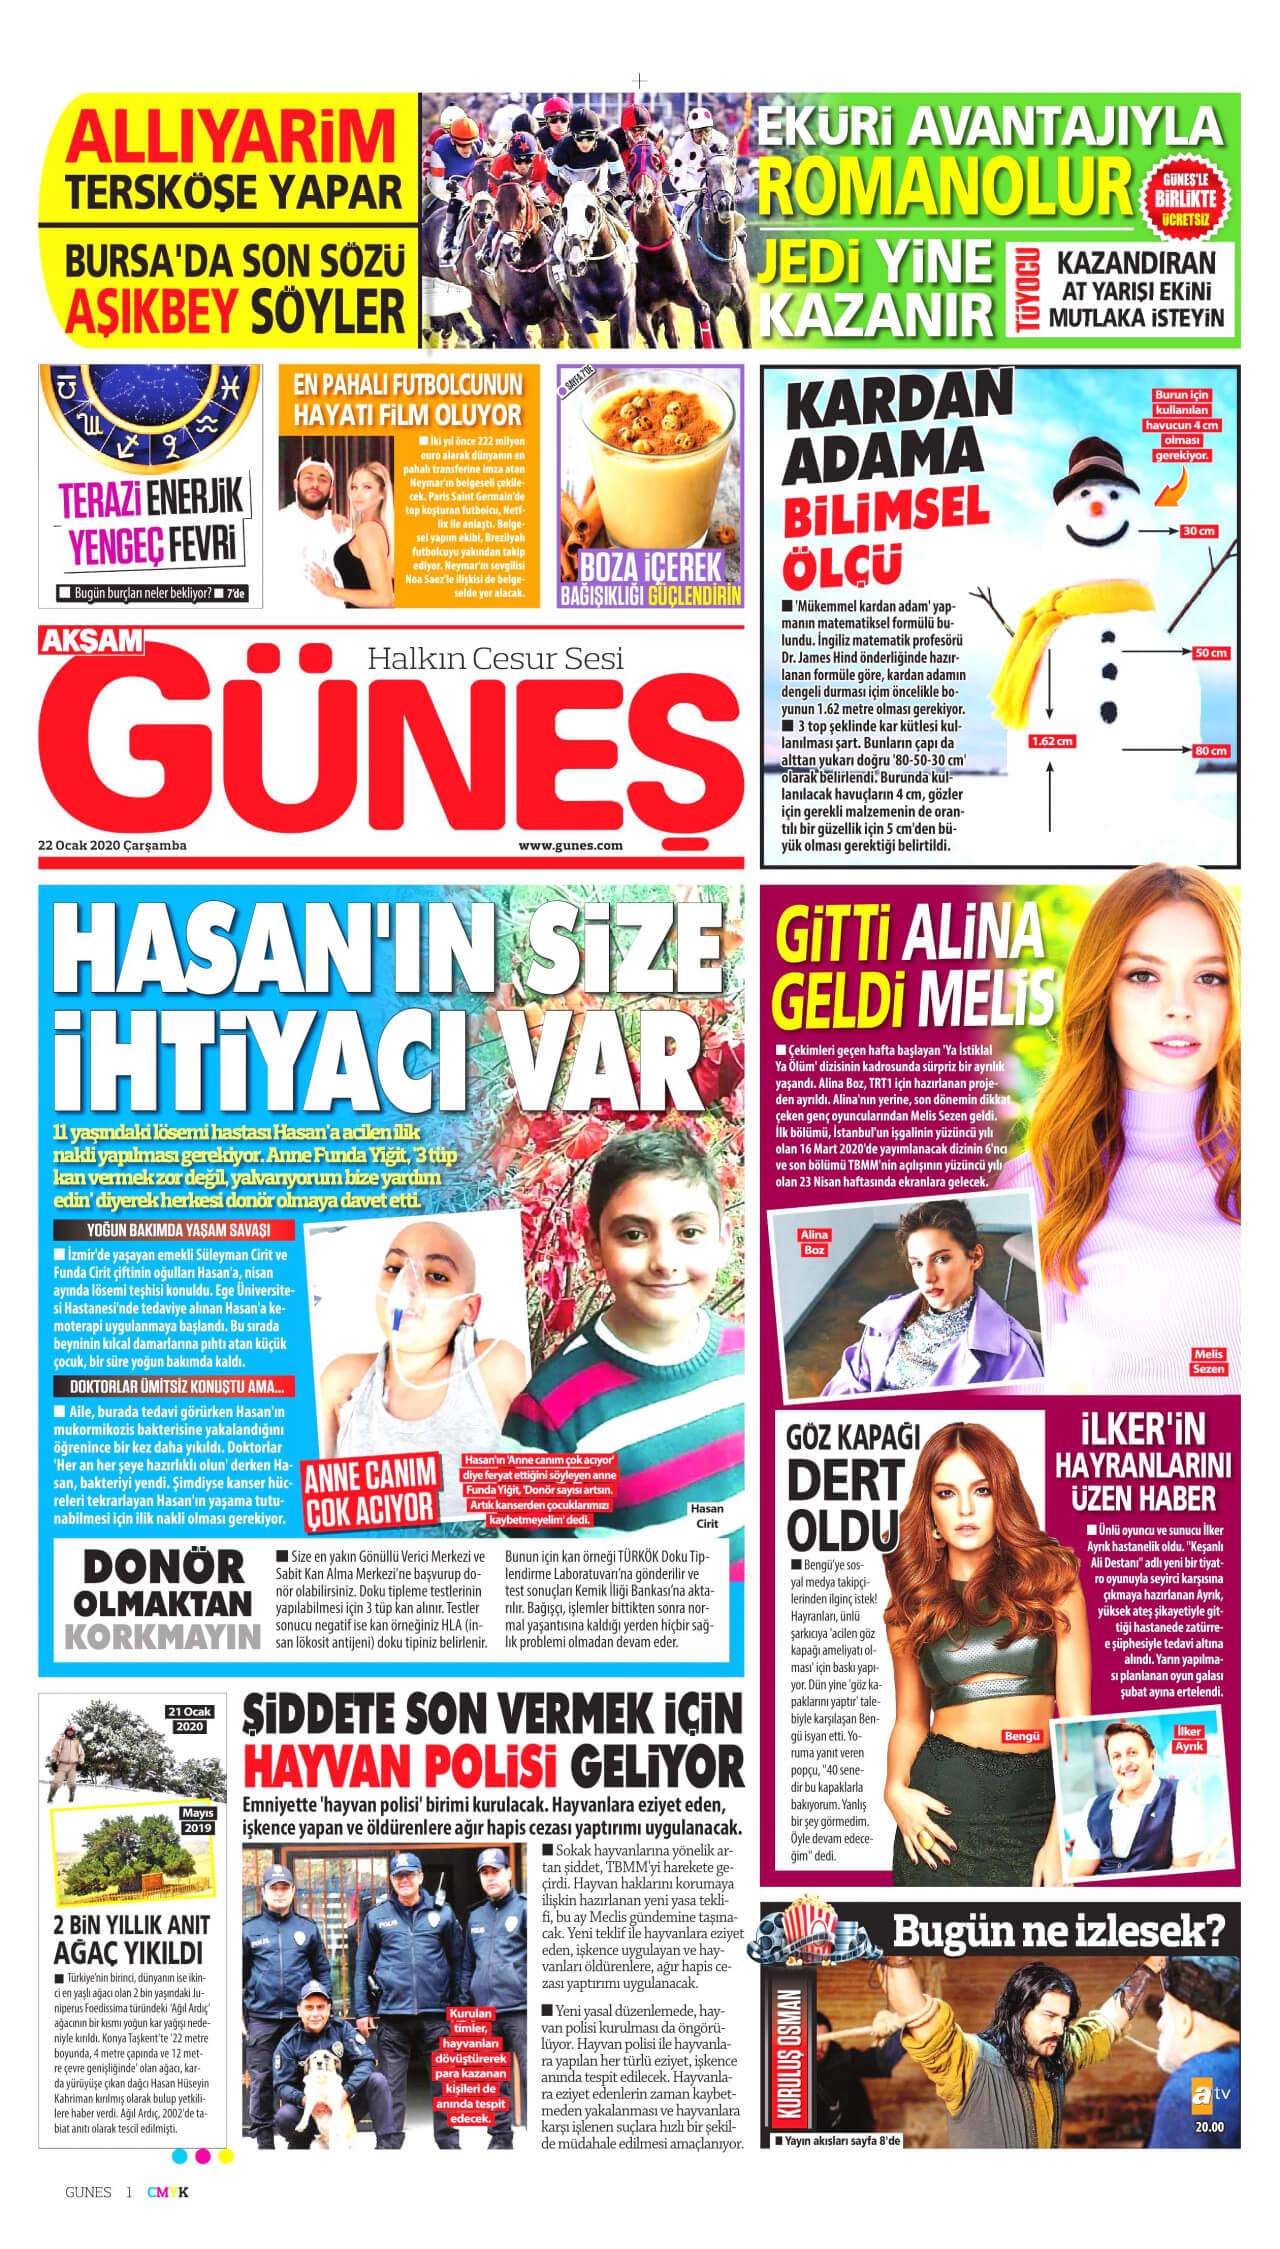 Turkish Newspapers 37 Gunes